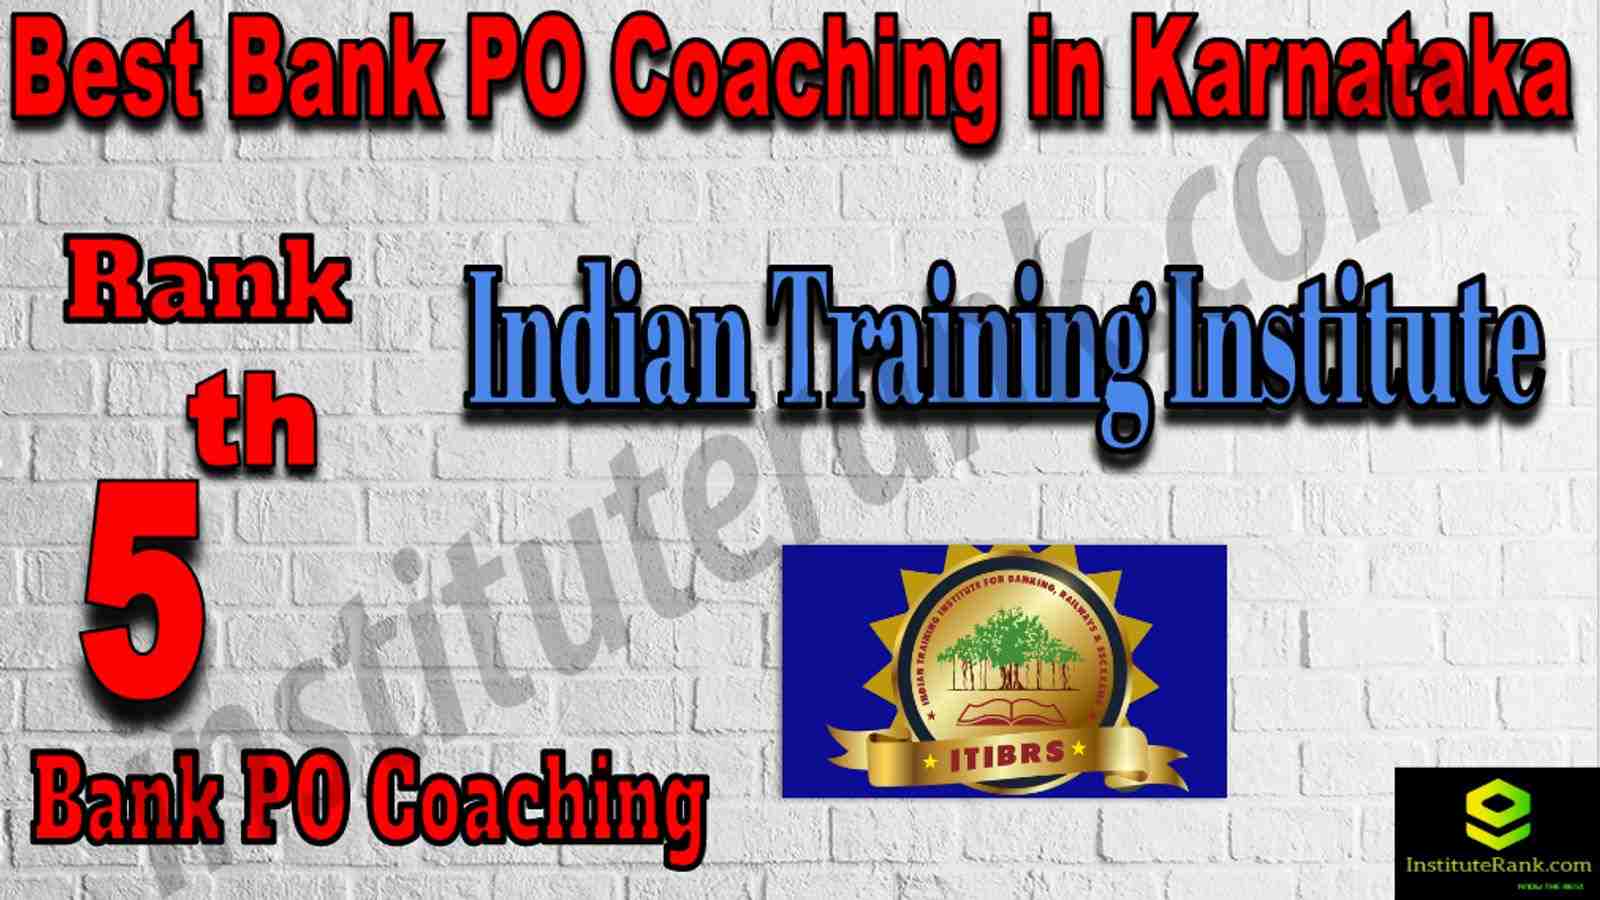 5th Best Bank PO Coaching in Karnataka